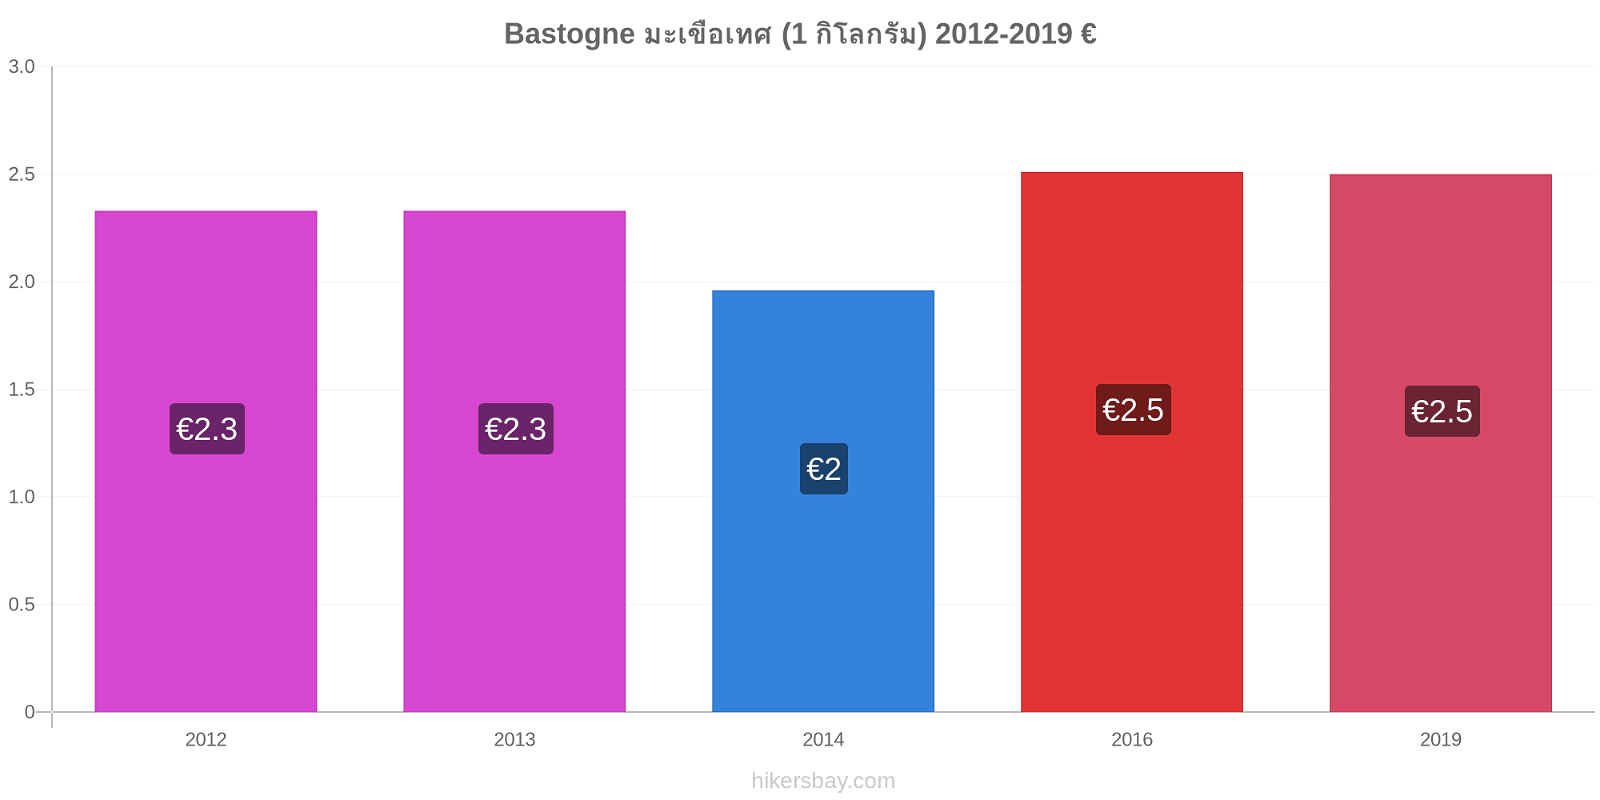 Bastogne การเปลี่ยนแปลงราคา มะเขือเทศ (1 กิโลกรัม) hikersbay.com